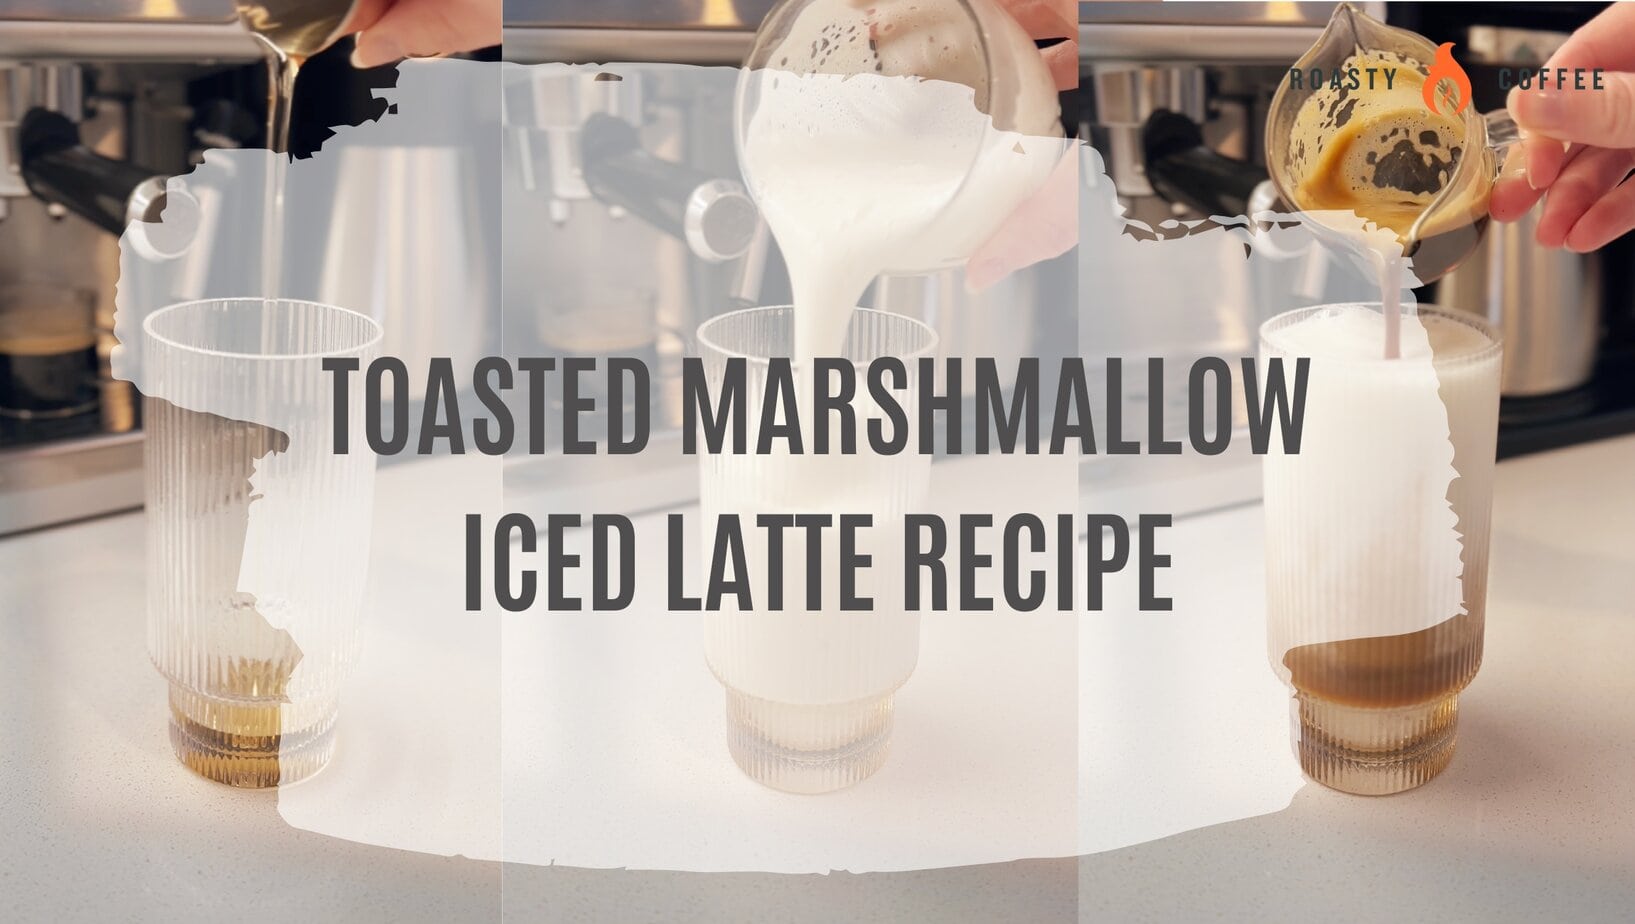 Toasted Marshmallow Iced Latte